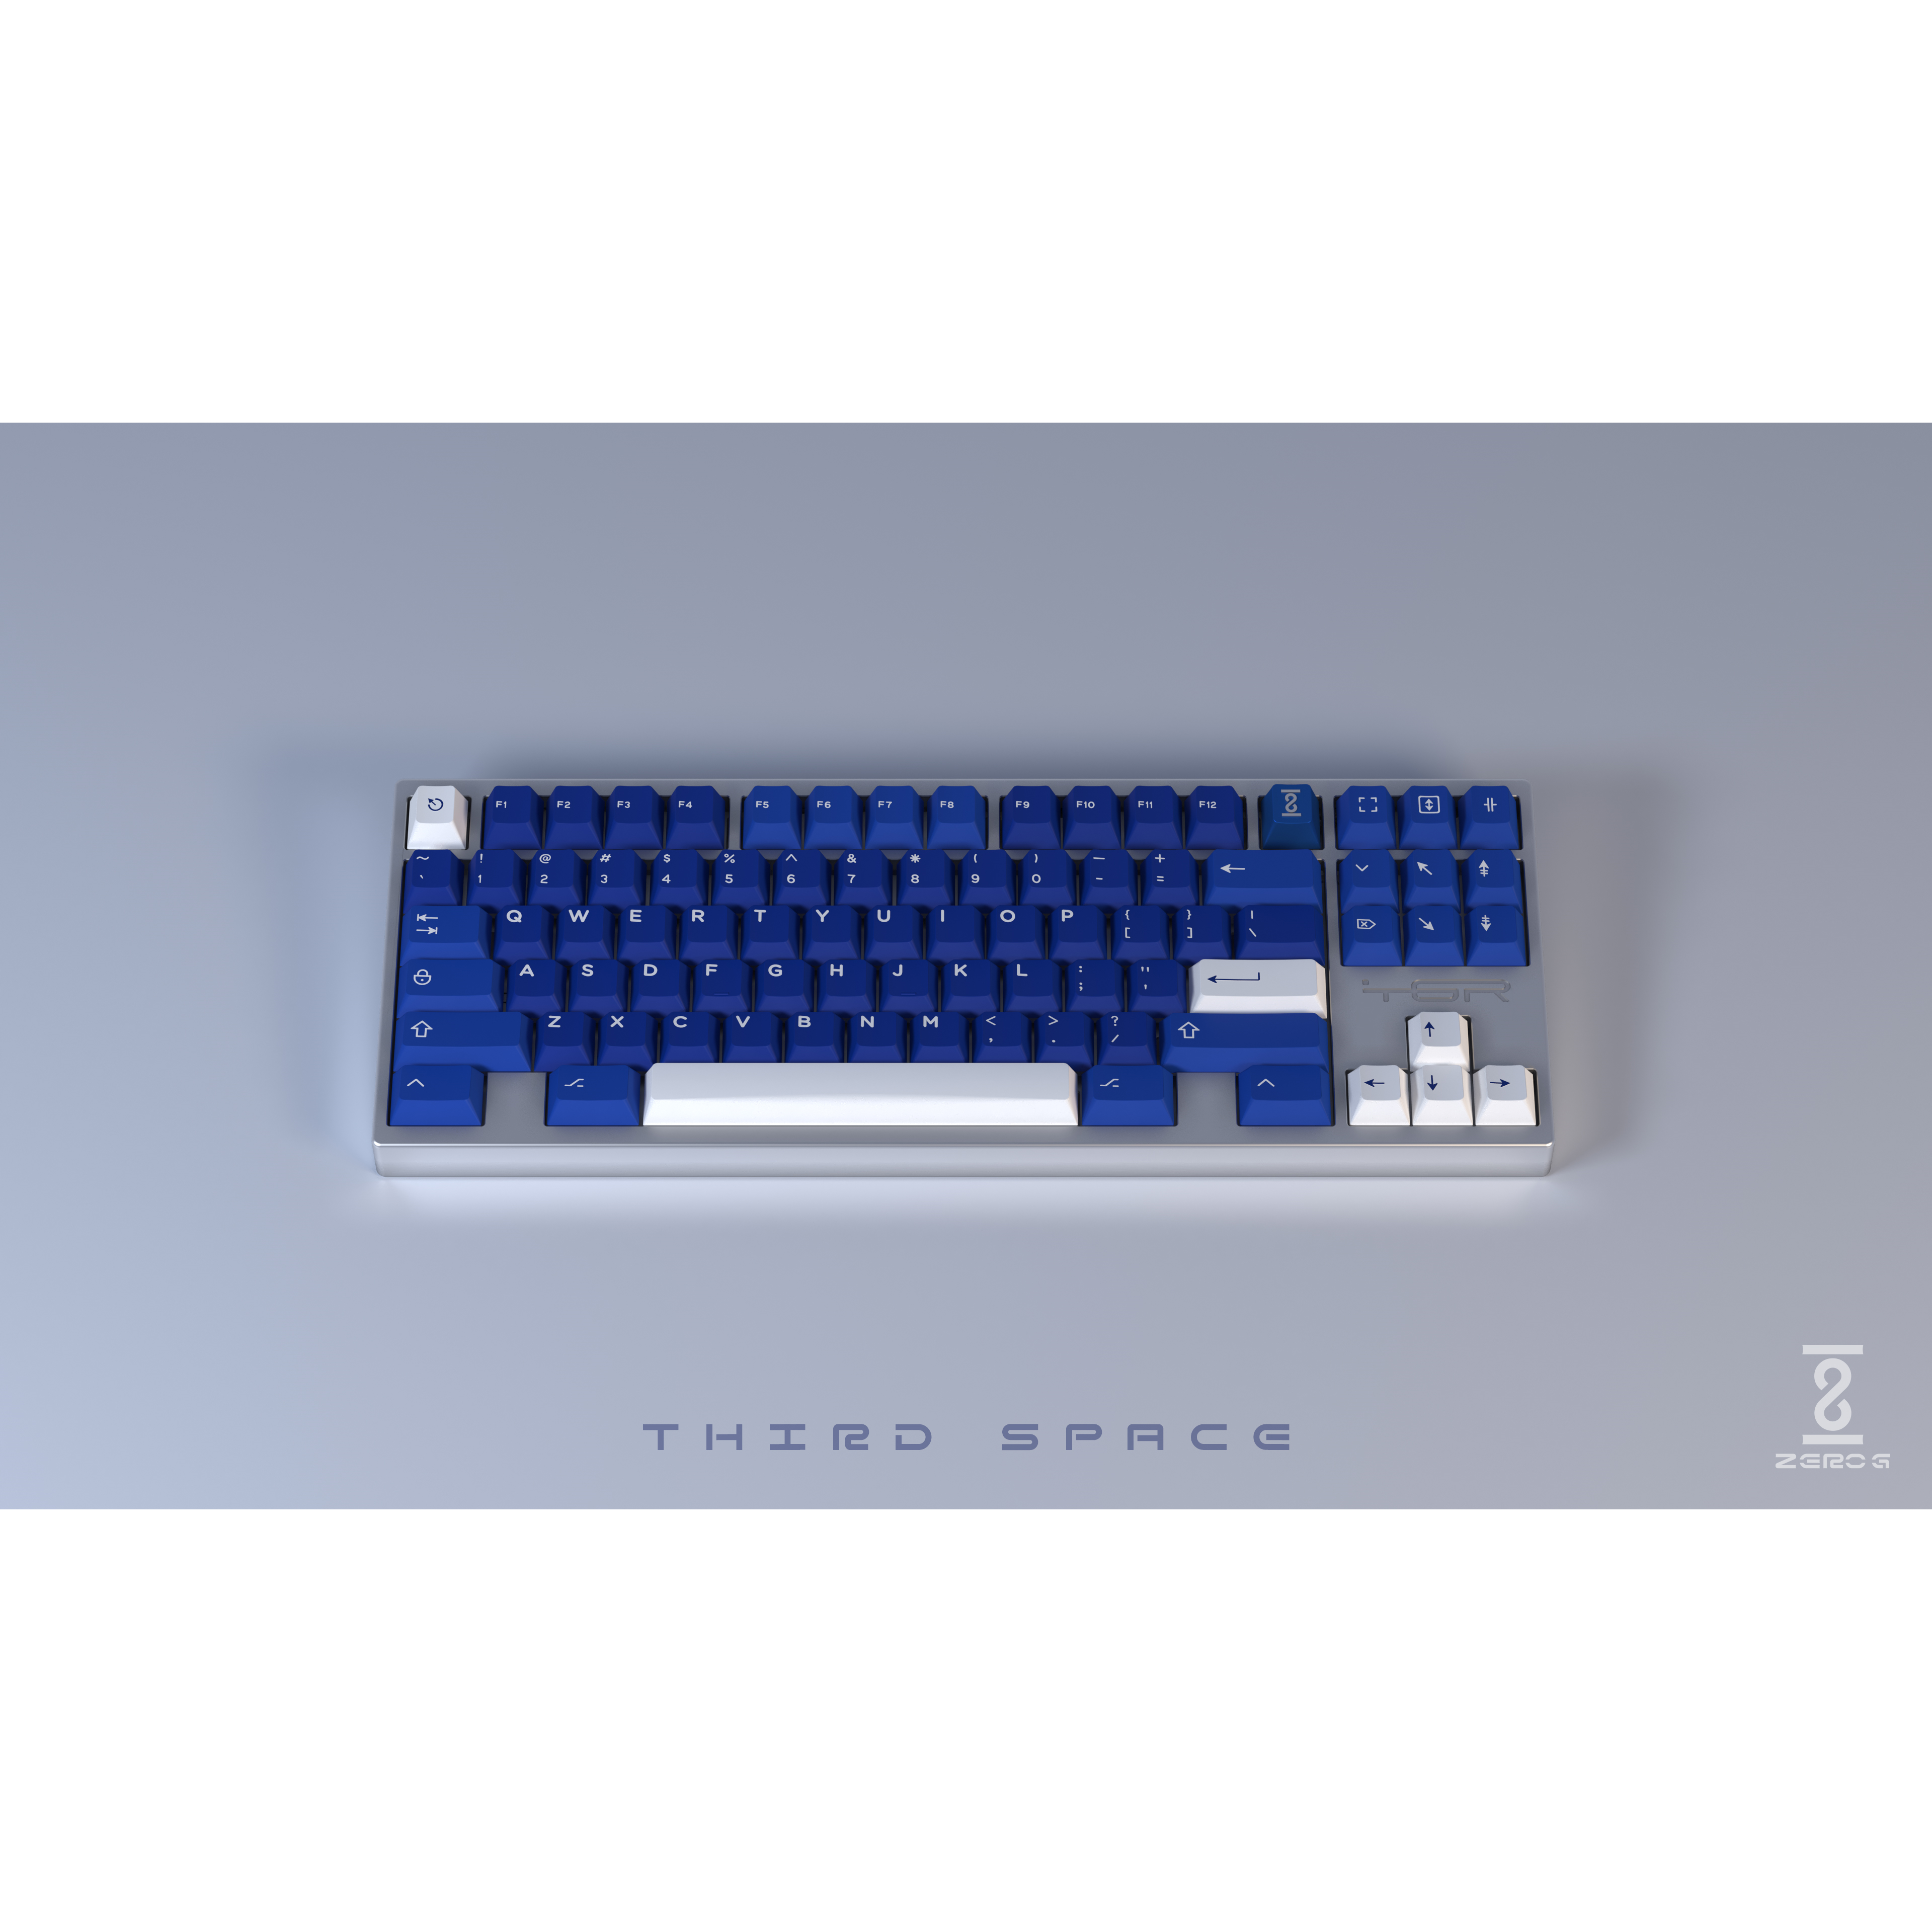 Zero-G Studio X DMK ABS Keycaps "THIRD SPACE"